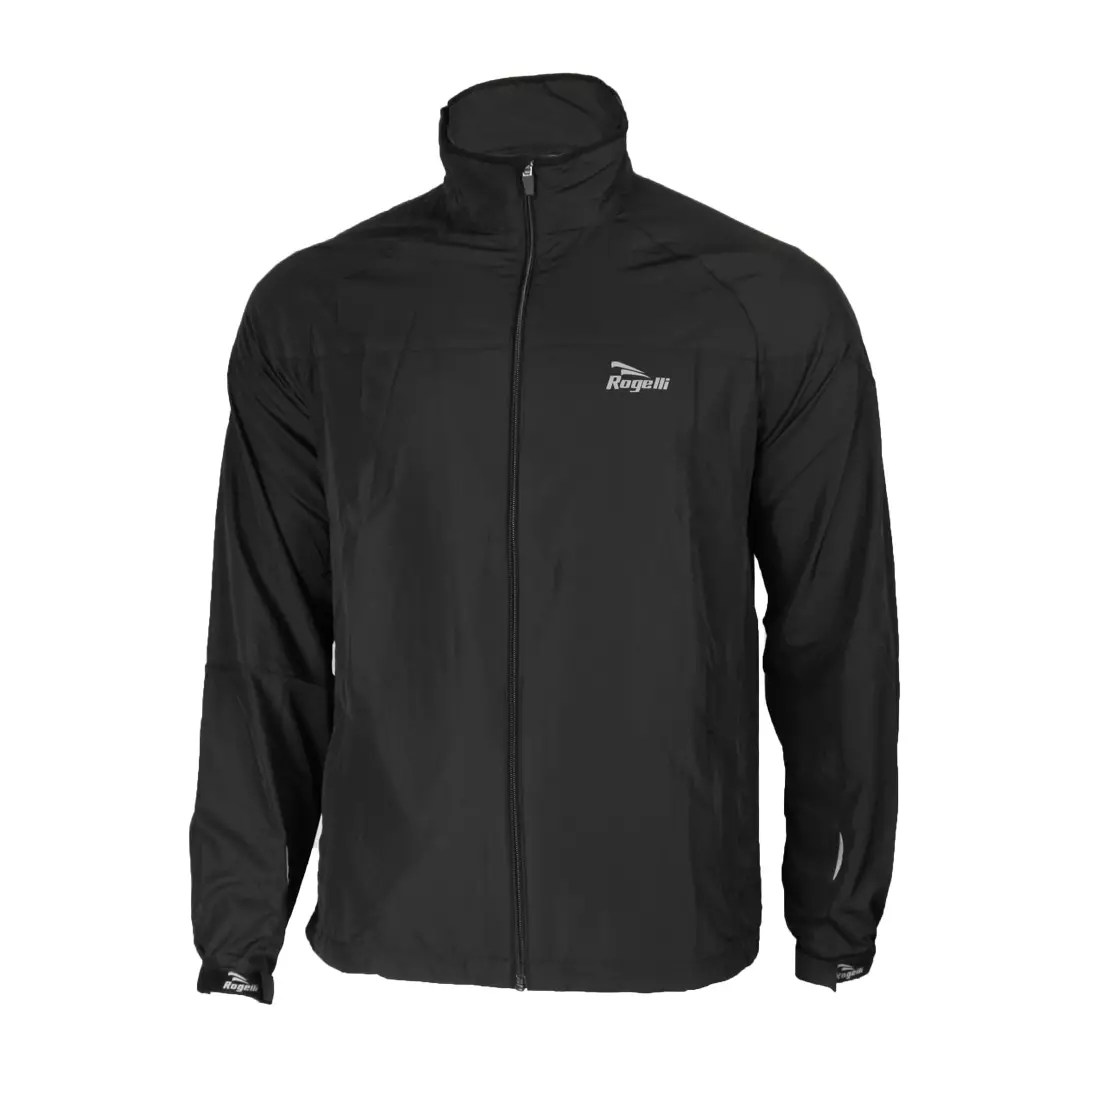 ROGELLI RUN - RENVILLE - men's windbreaker jacket, color: Black